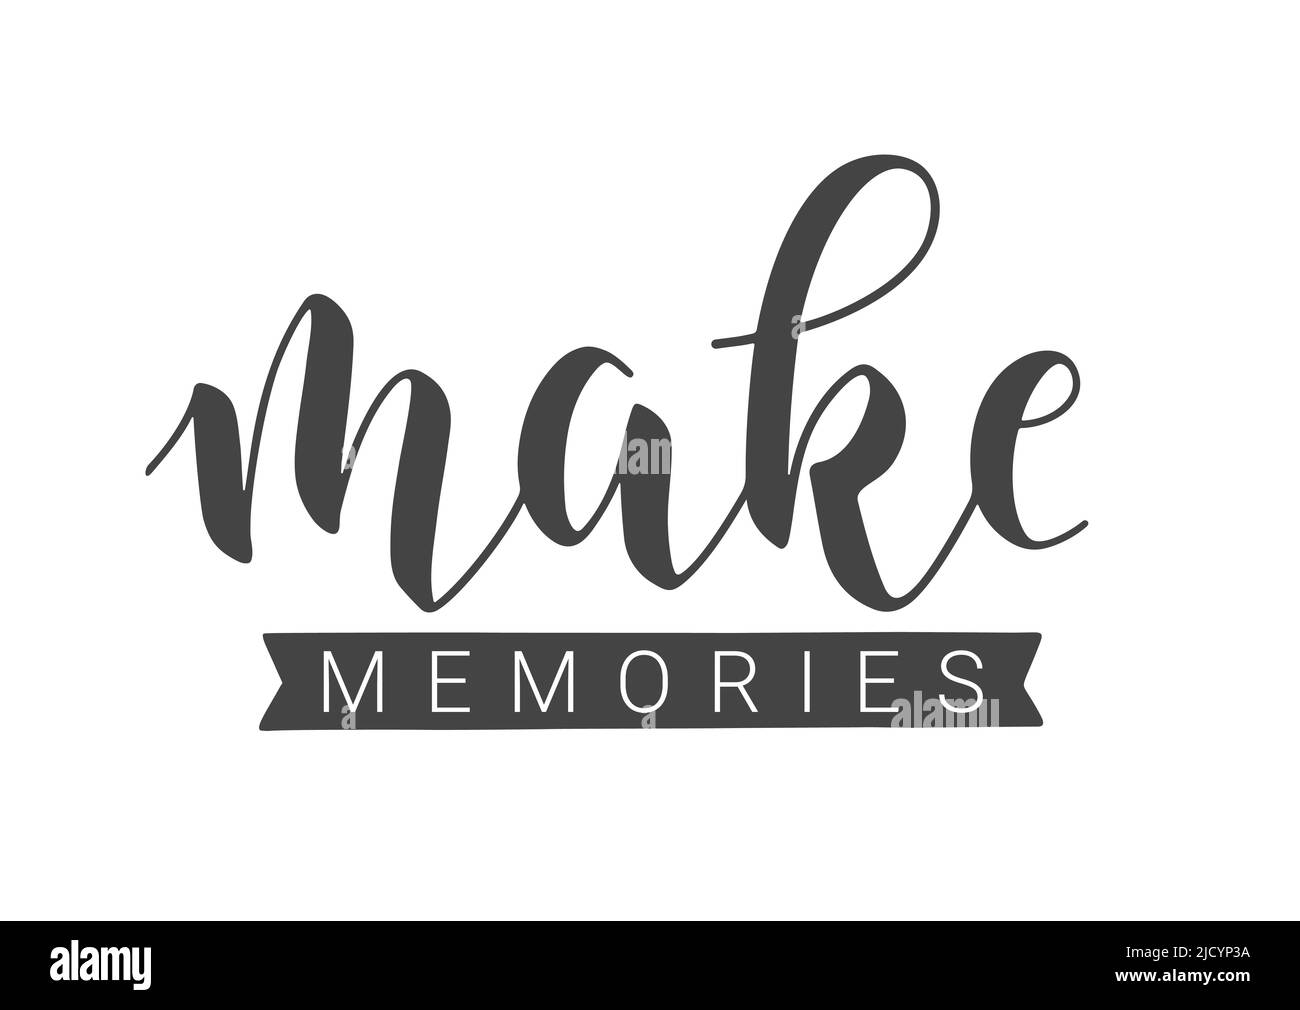 Ilustración de stock vectorial. Escritura manuscrita de Make Memories. Plantilla para banner, postal, póster, impresión, pegatina o producto web. Ilustración del Vector